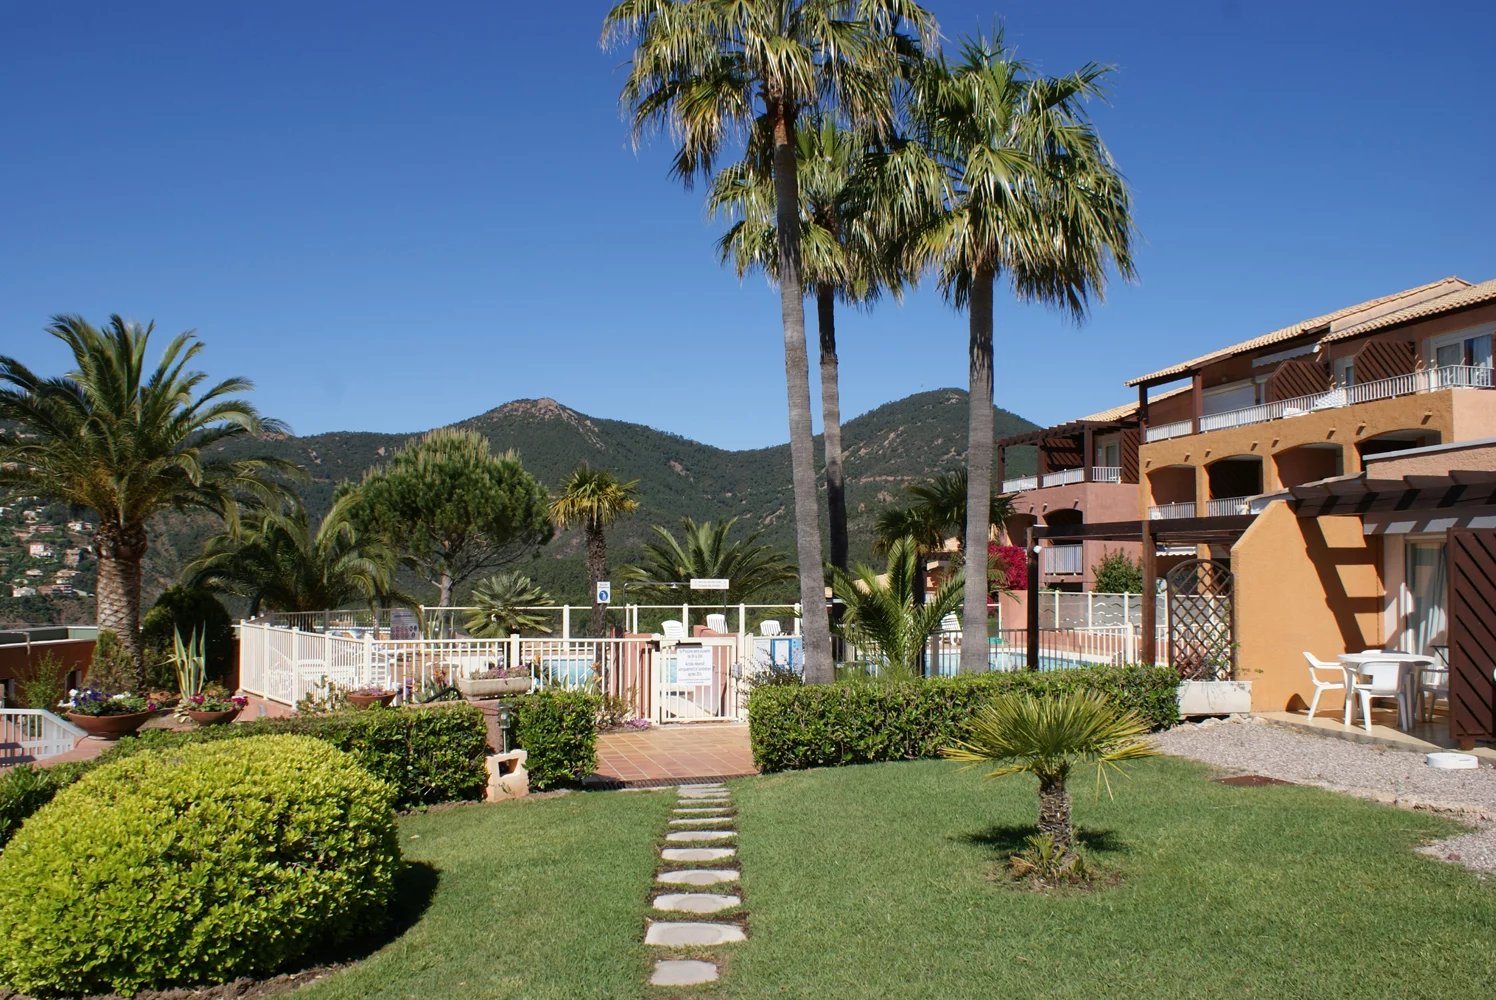 Pleasant villa with a breathtaking view